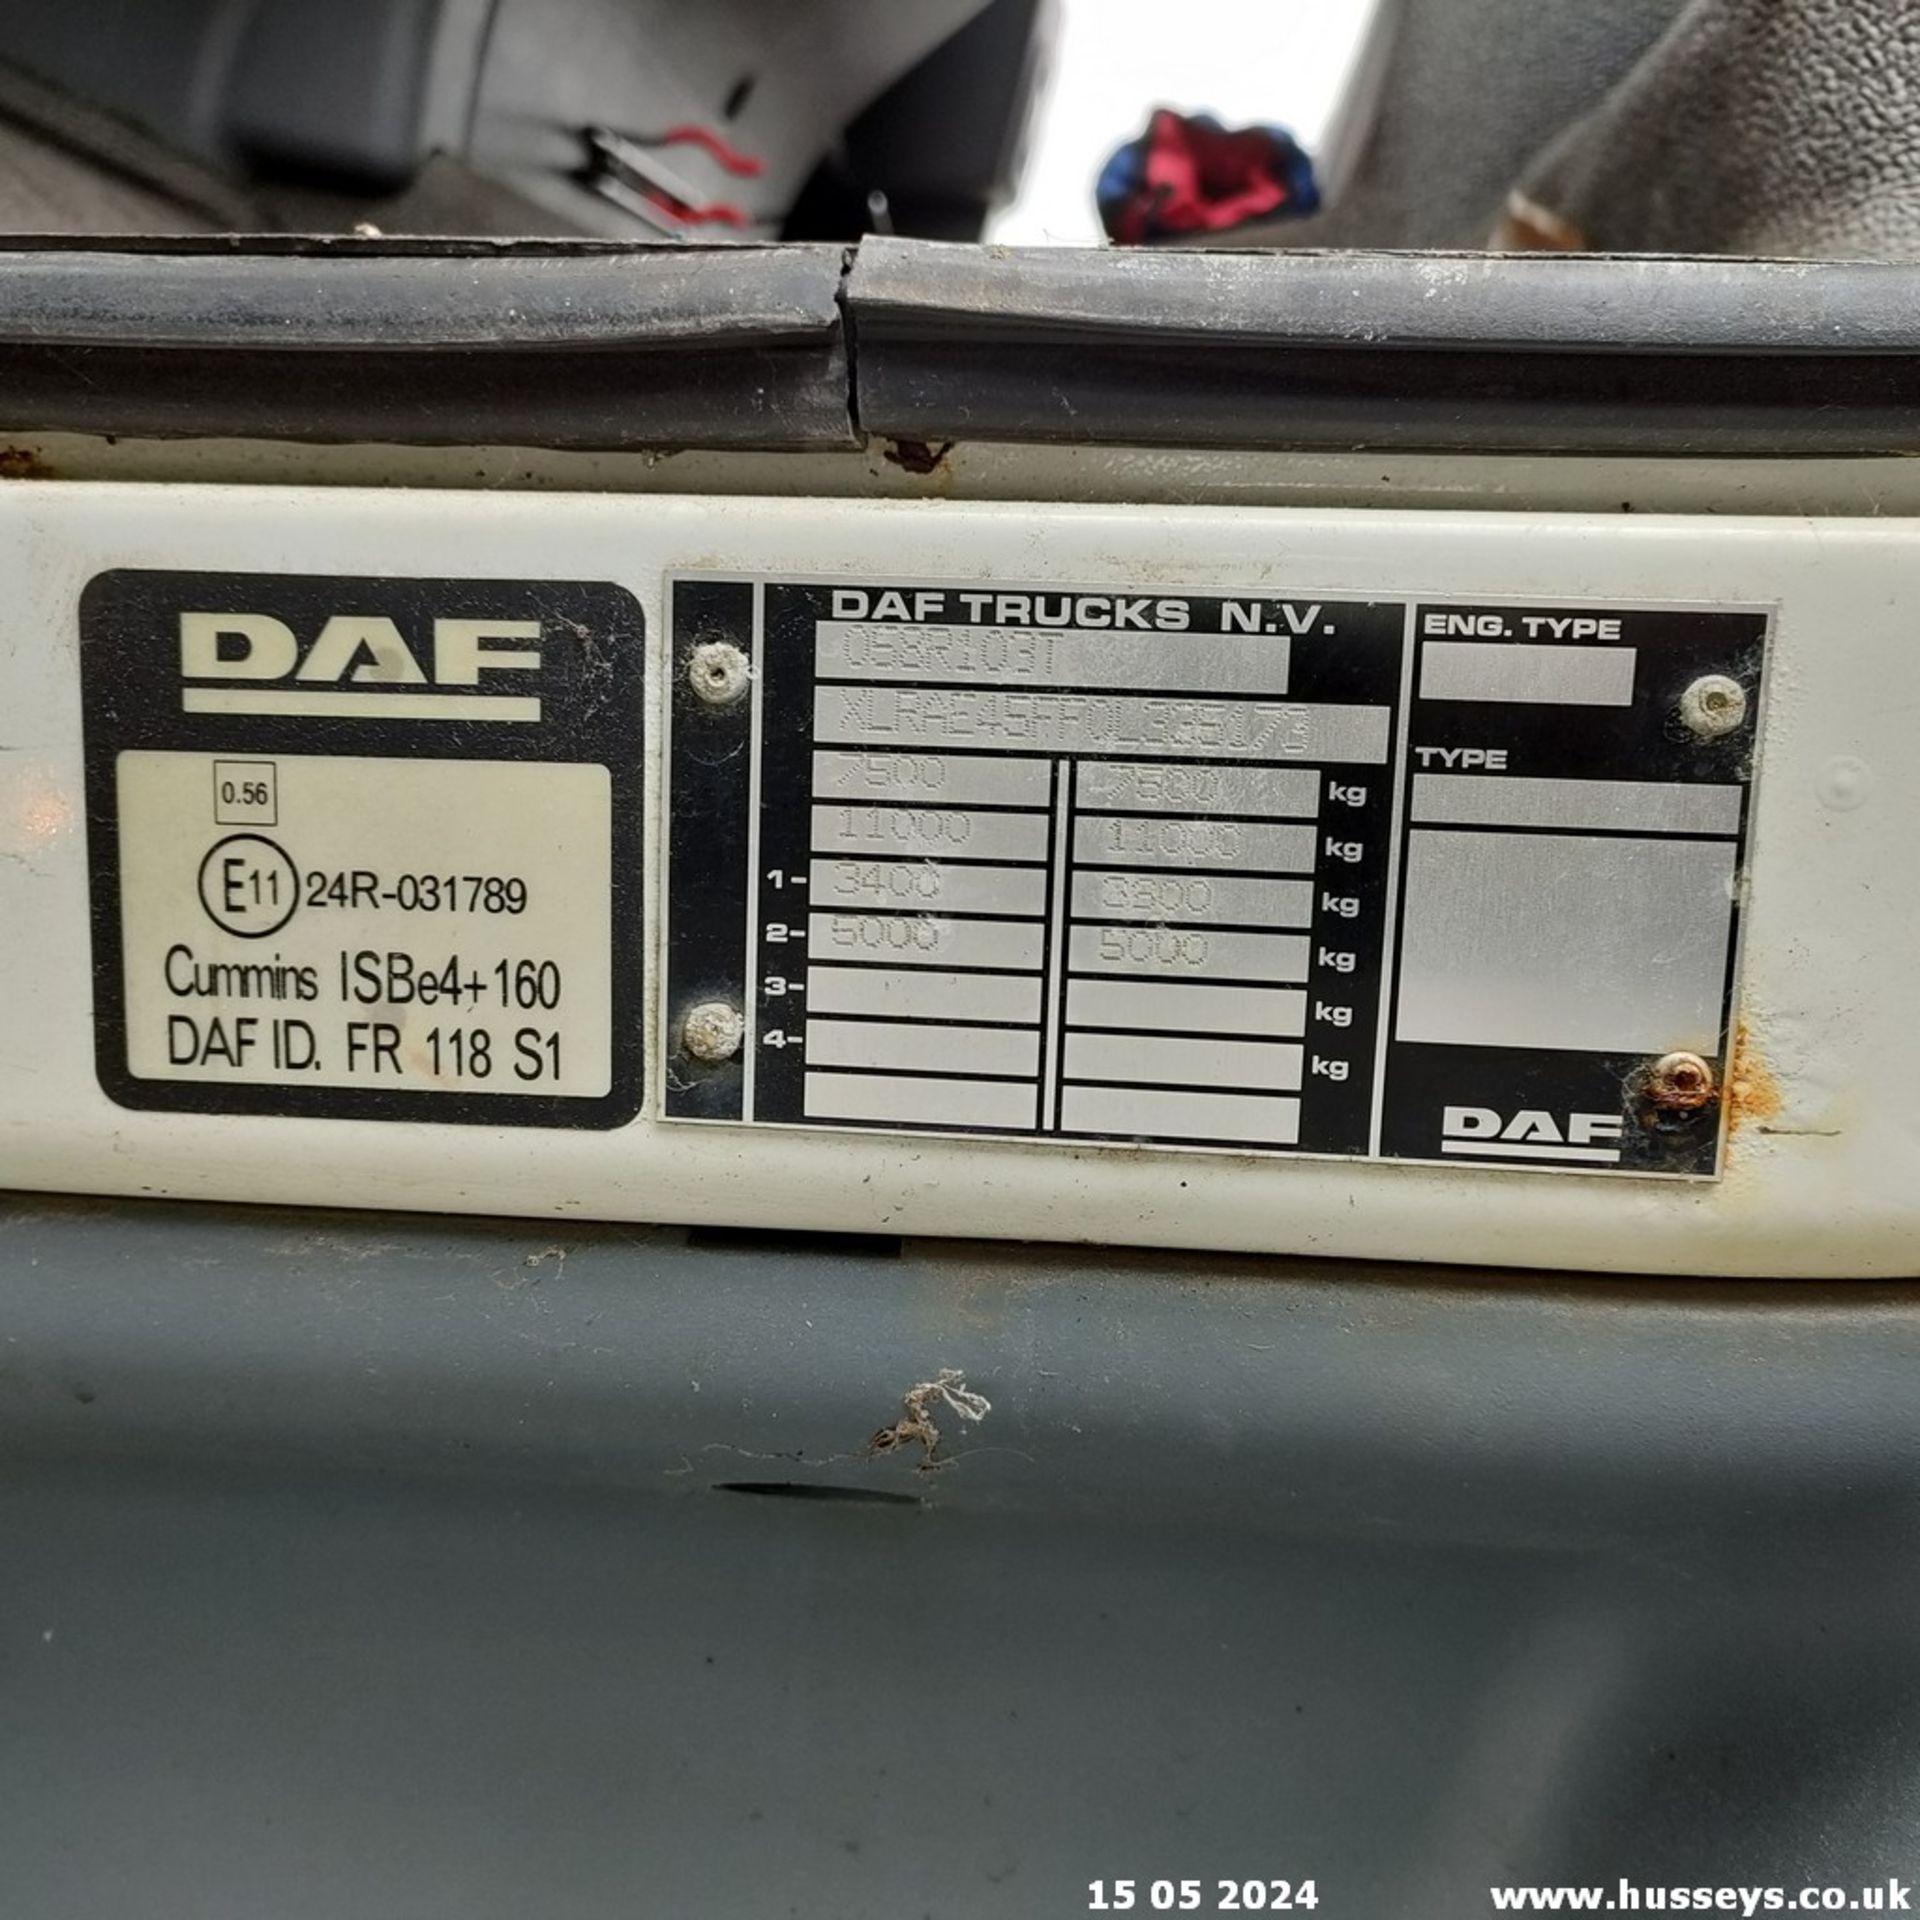 08/57 DAF TRUCKS LF MOBILE CLINIC - 4500cc 4dr (White, 24k) - Image 77 of 77